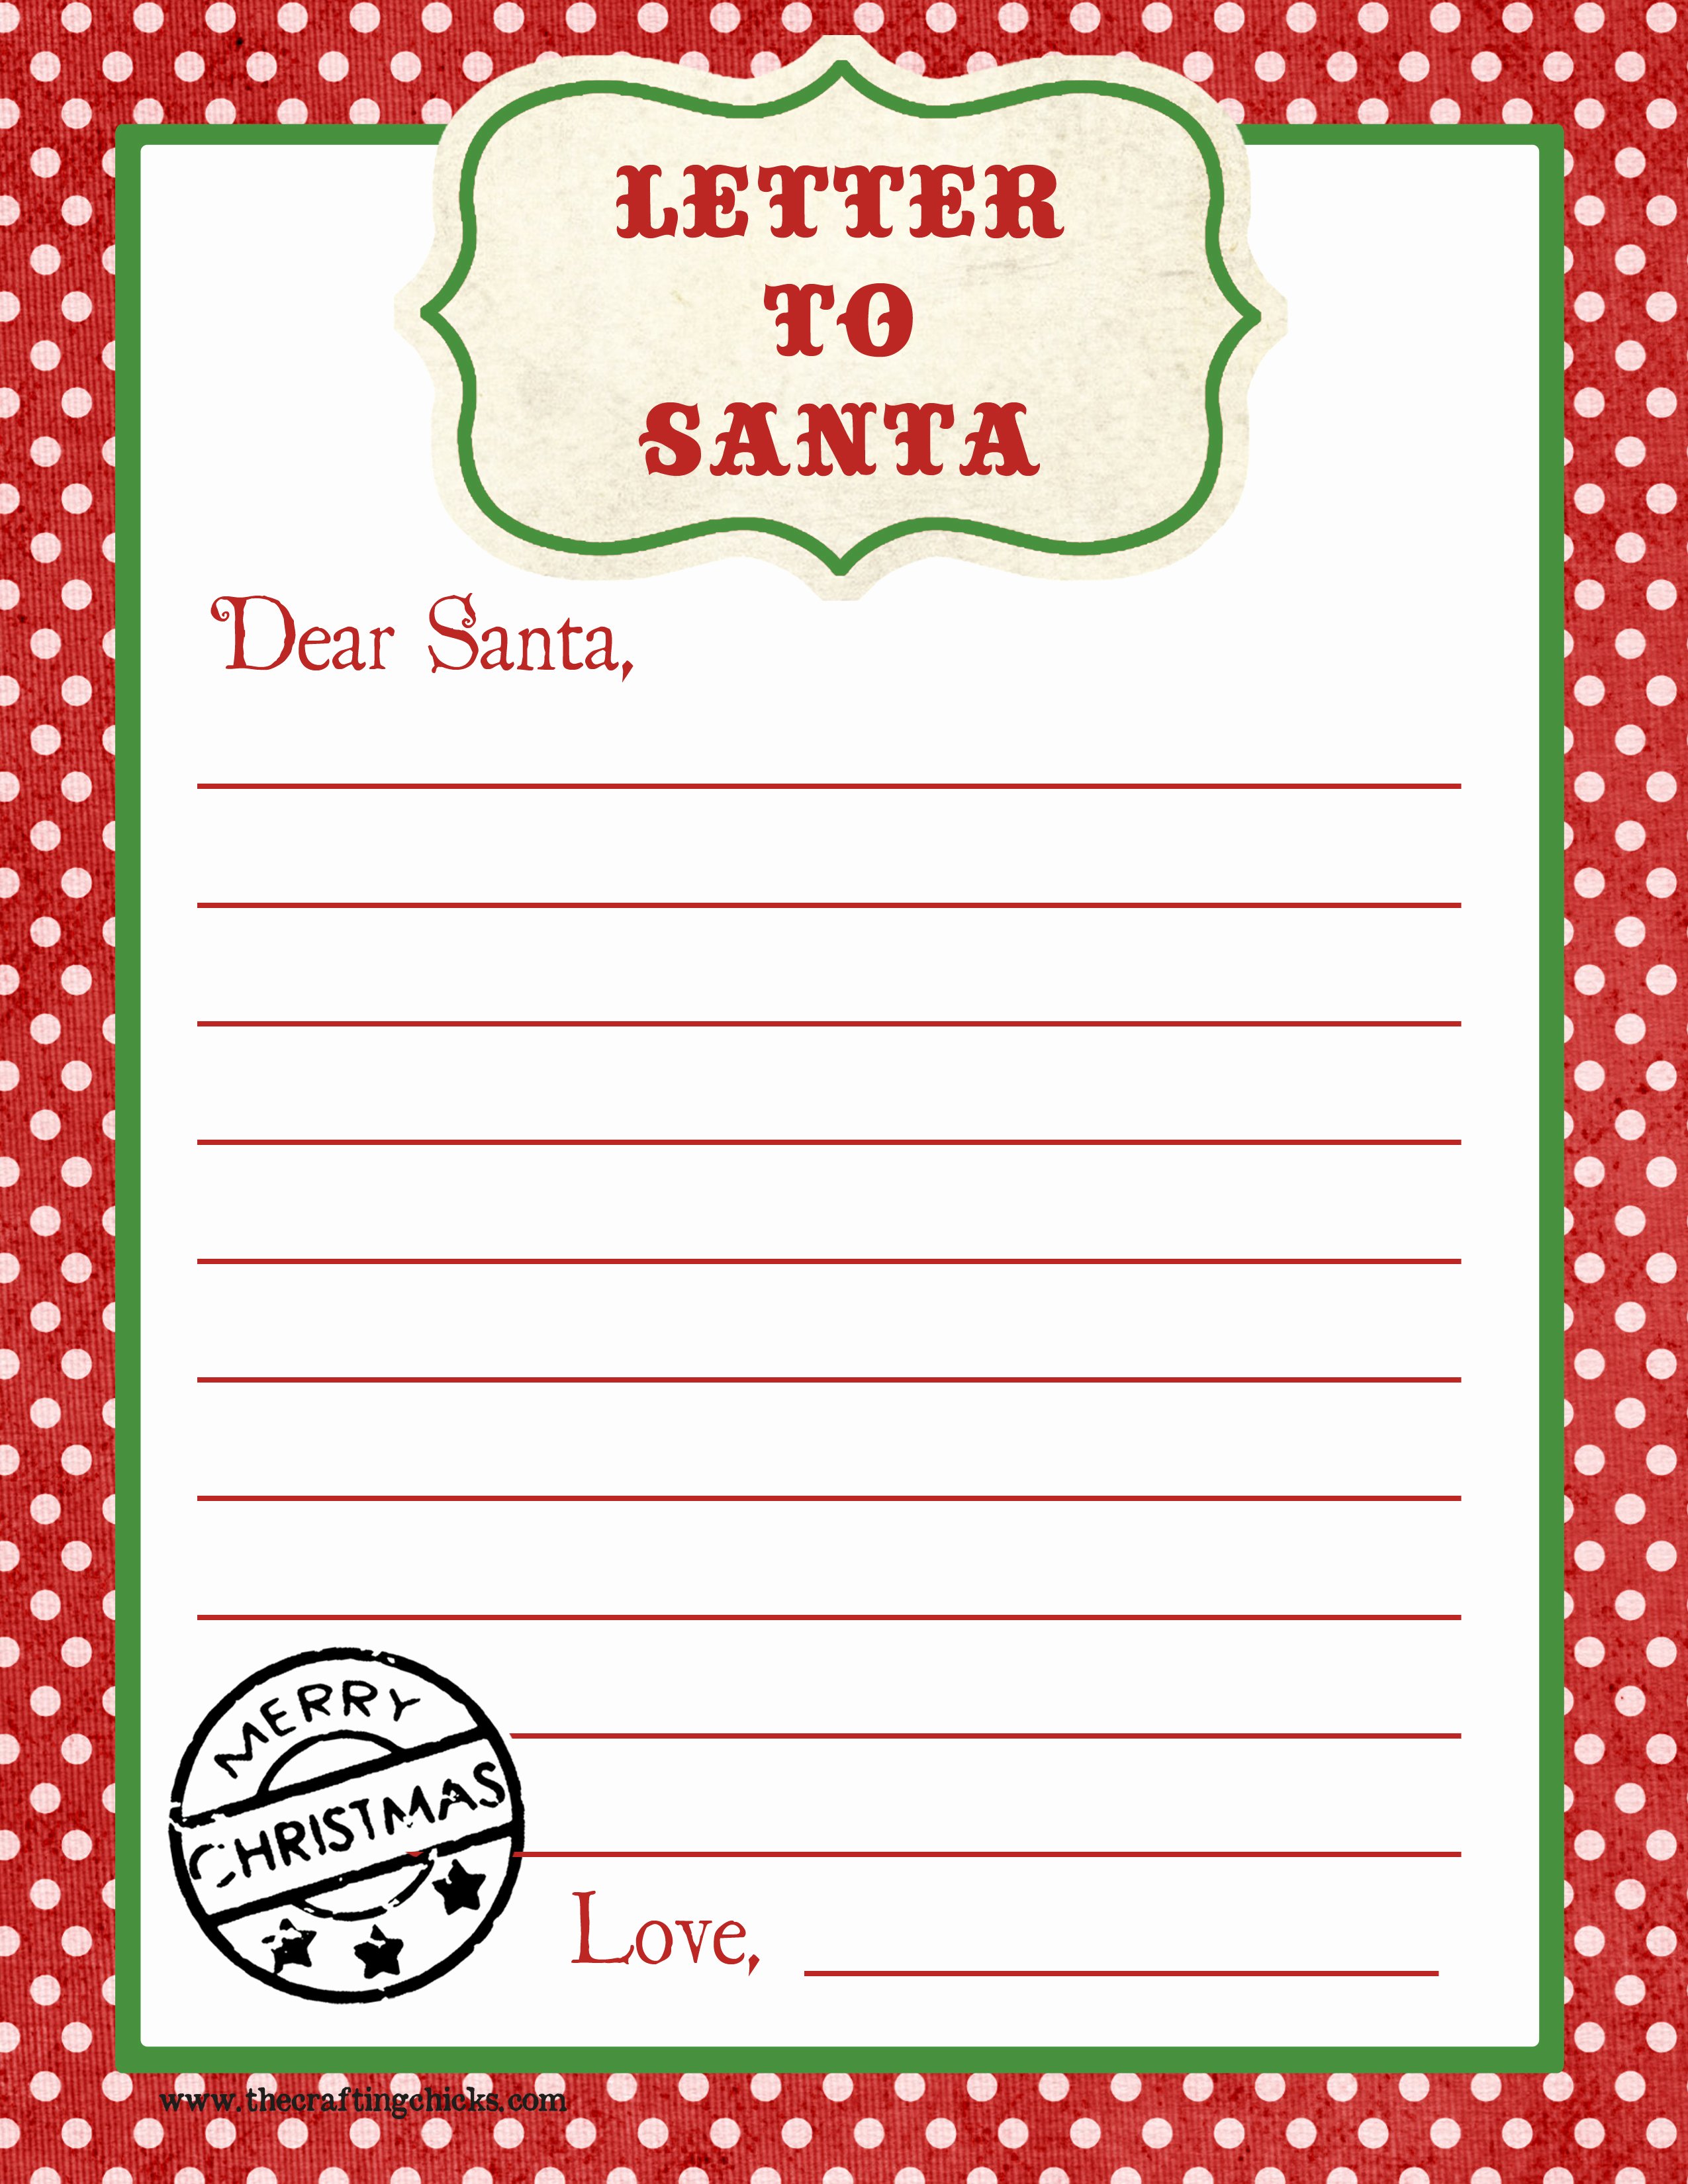 Free Santa Letter Template Fresh Letter to Santa Free Printable Download